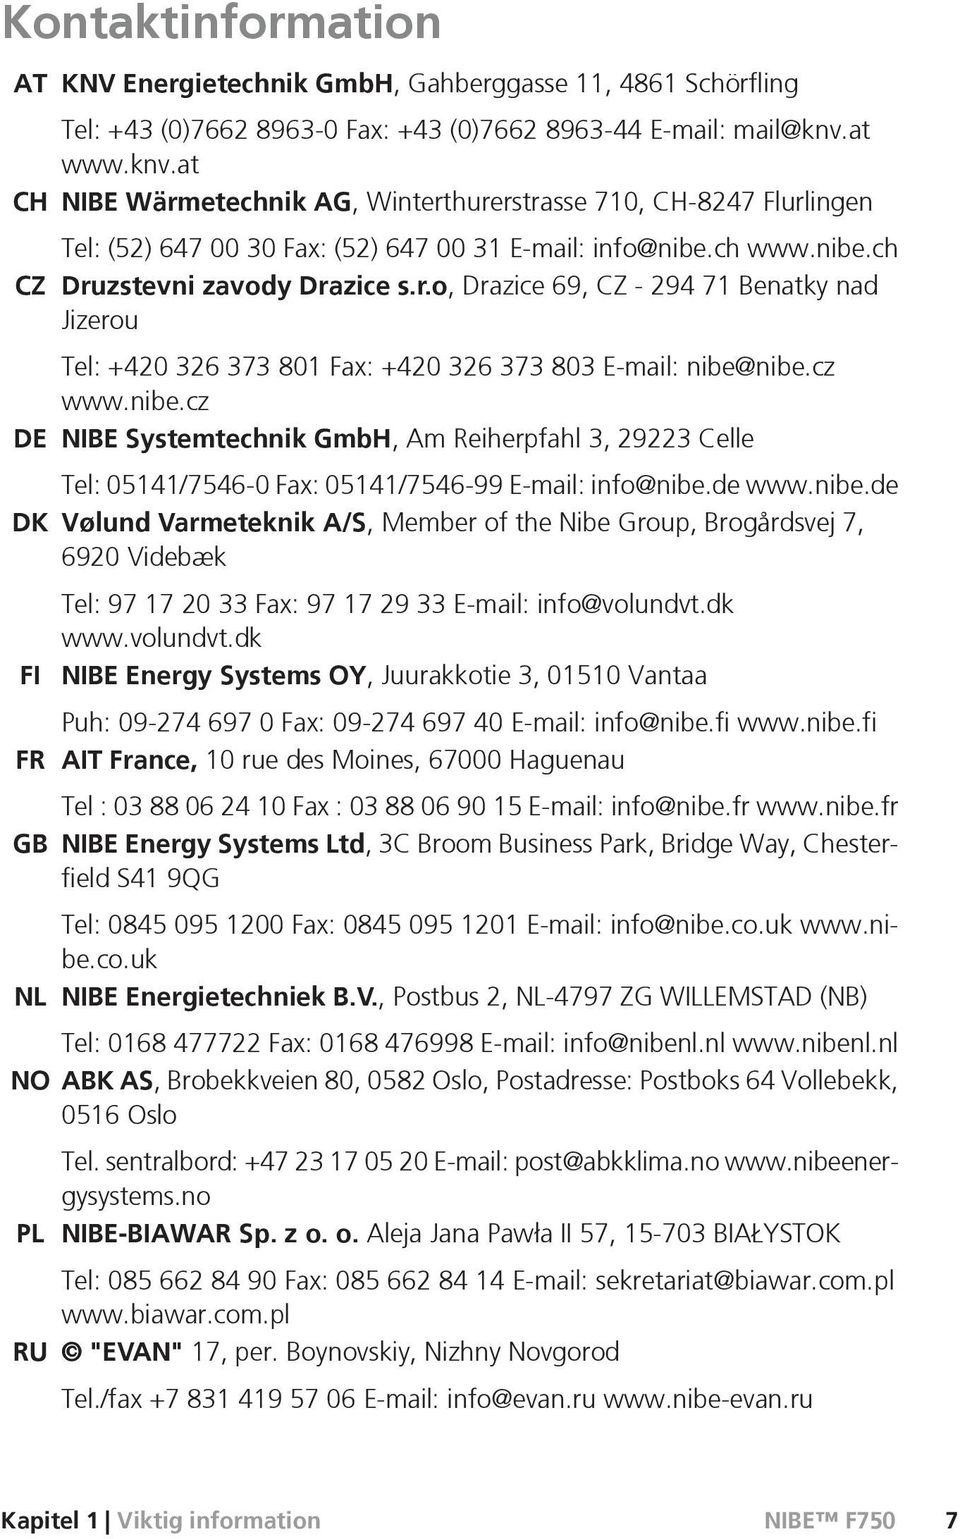 cz www.nibe.cz DE NIBE Systemtechnik GmbH, Am Reiherpfahl 3, 29223 Celle Tel: 05141/7546-0 Fax: 05141/7546-99 E-mail: info@nibe.de www.nibe.de DK Vølund Varmeteknik A/S, Member of the Nibe Group, Brogårdsvej 7, 6920 Videbæk FI FR GB Tel: 97 17 20 33 Fax: 97 17 29 33 E-mail: info@volundvt.